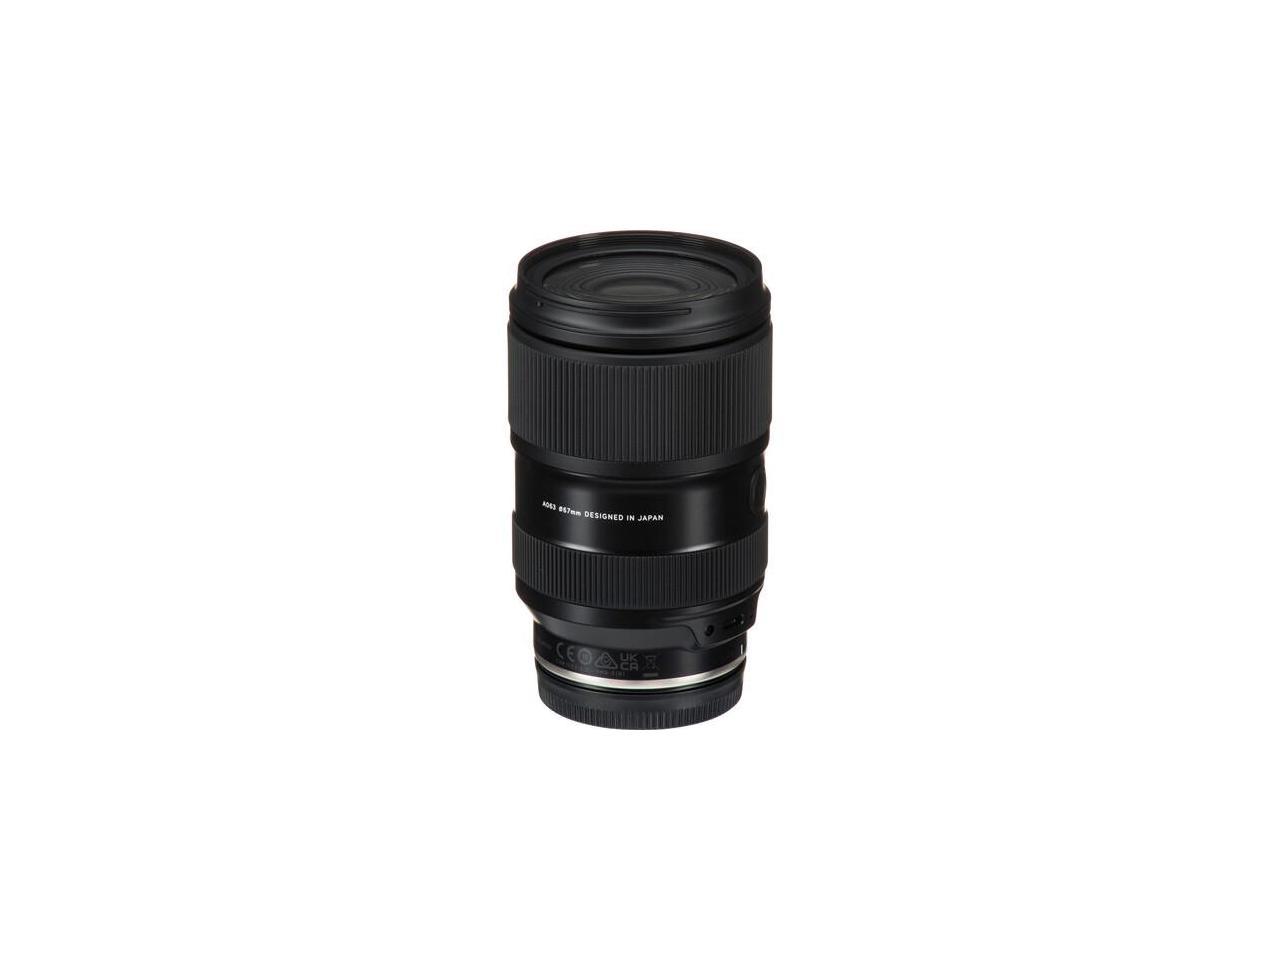 Tamron - 28-75mm f/2.8 di III VXD G2 Lens for Sony E Mount (Intenational Model)